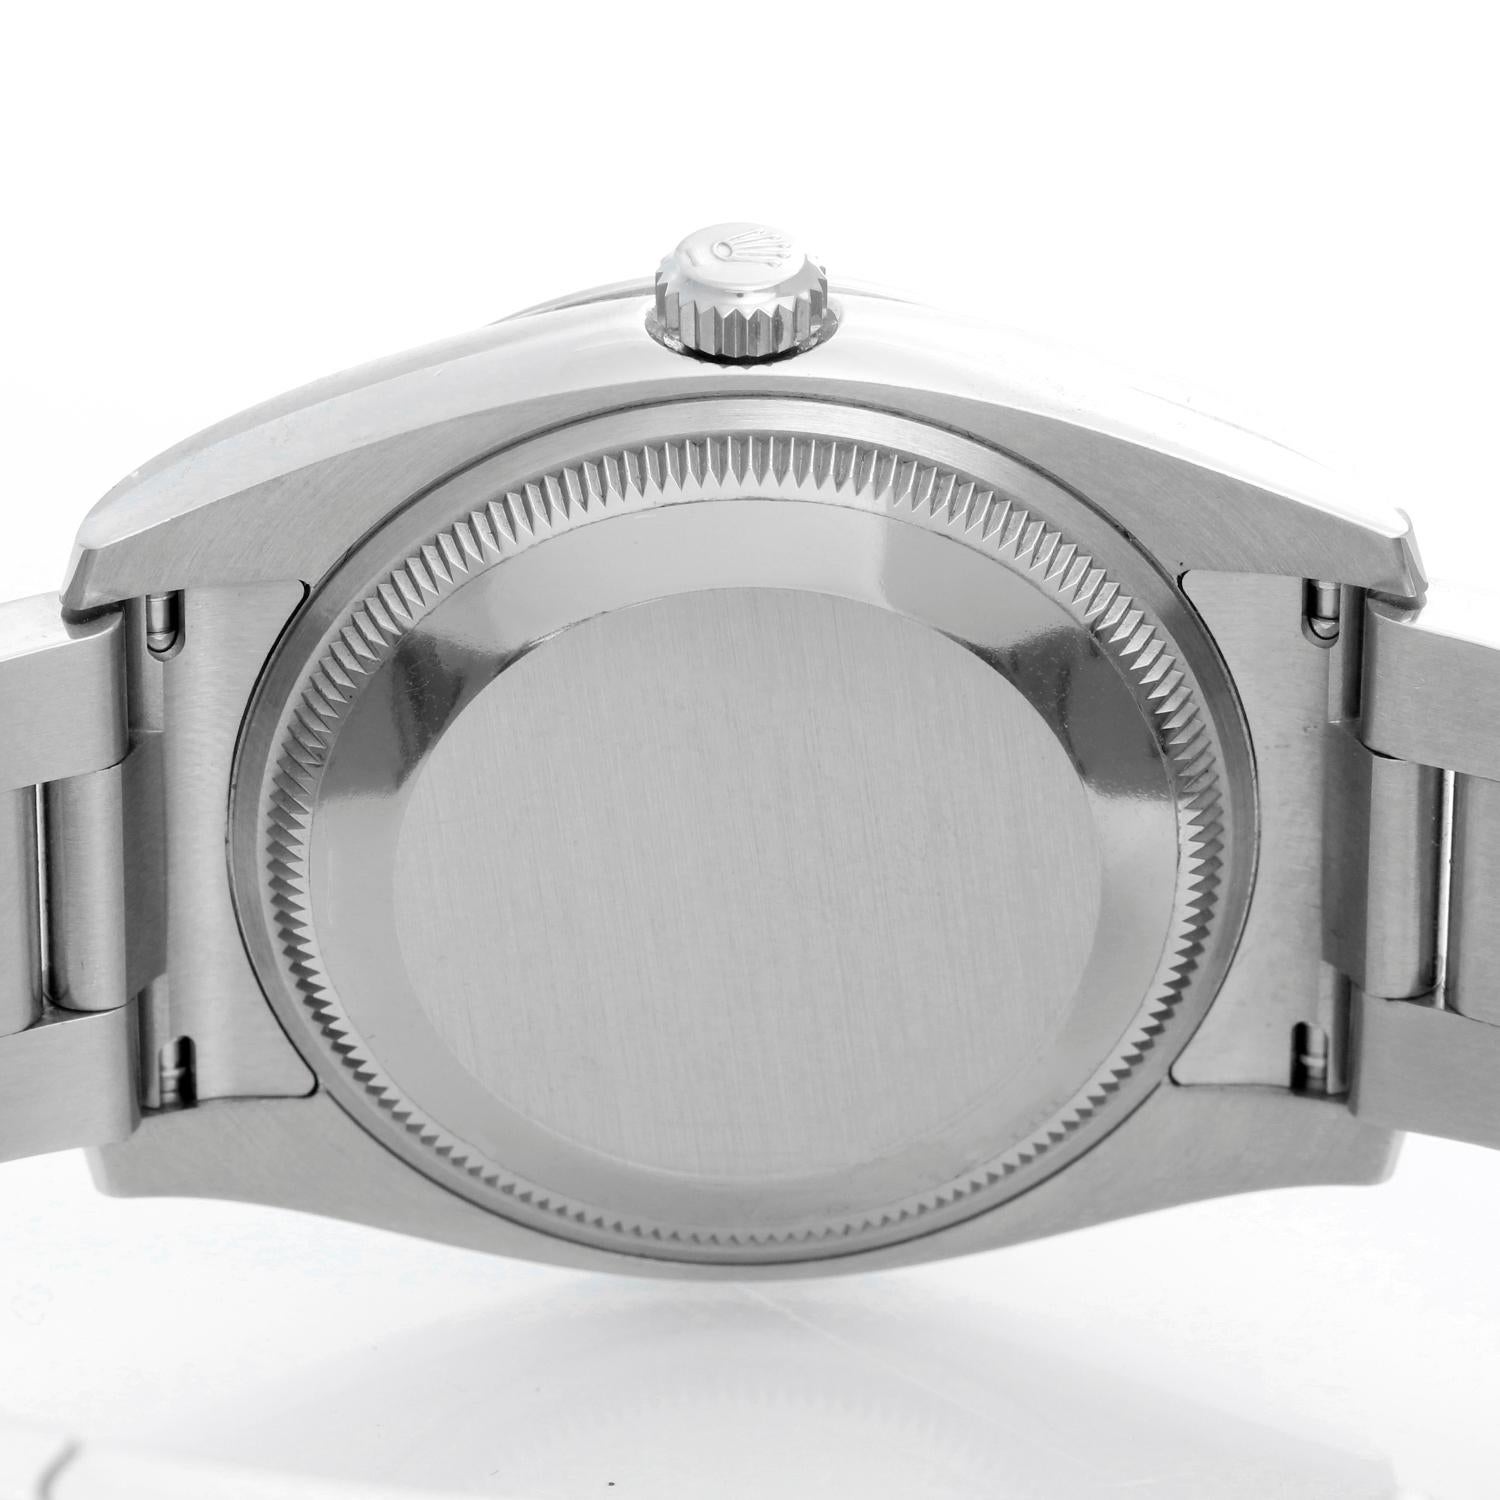 Rolex Date Oyster Perpetual Men's Watch 115200 1